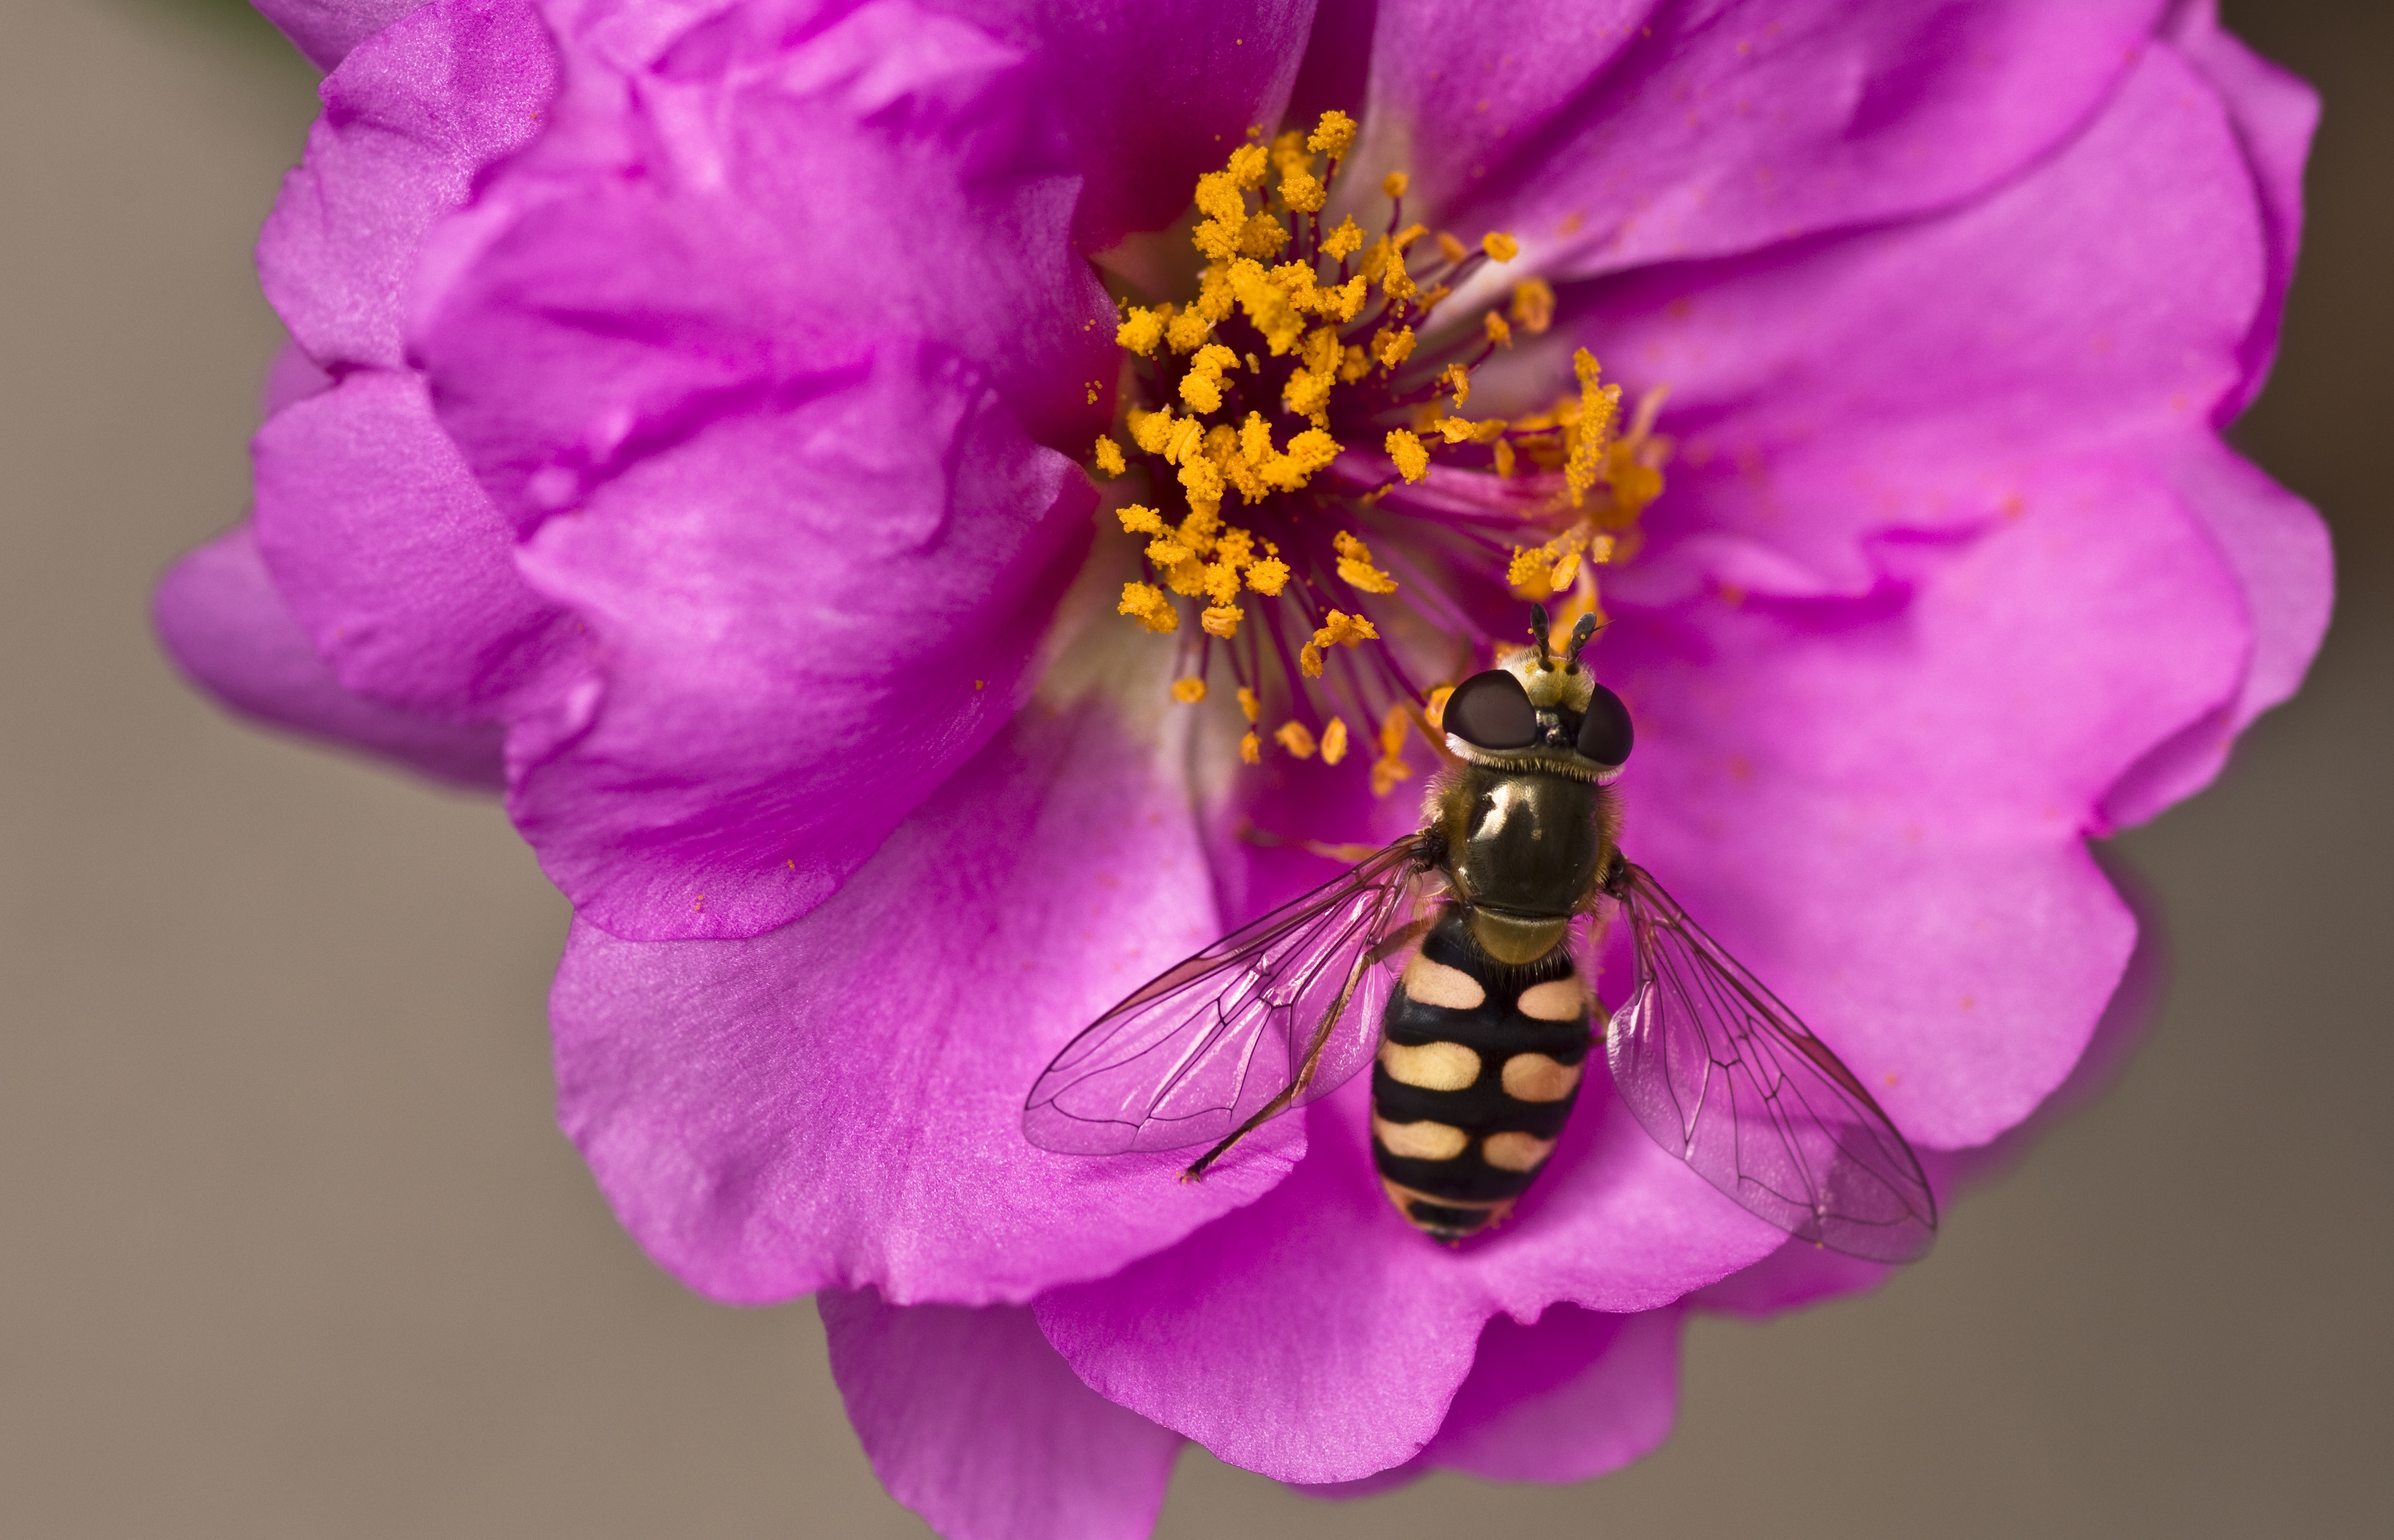 Hoverfly on the stamen of a flower by DanielWanke